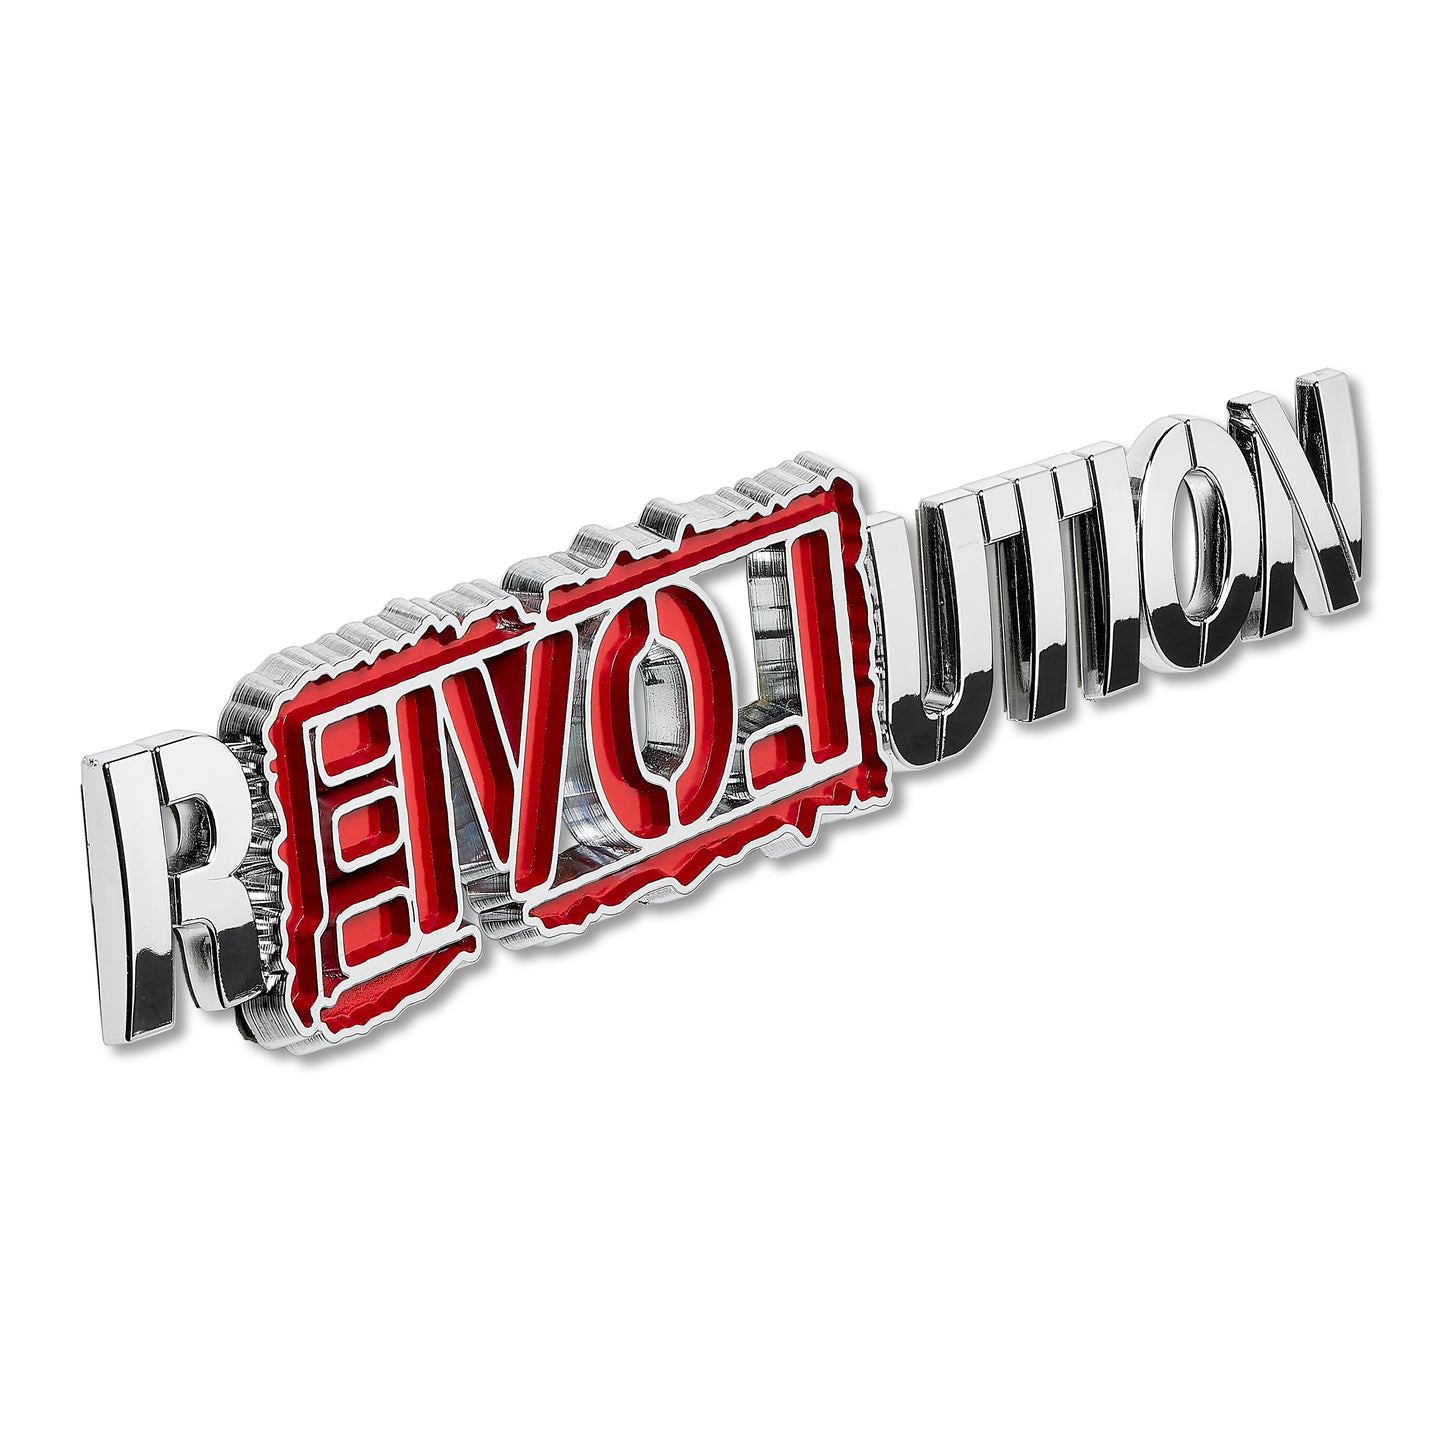 Ron Paul Revolution Chrome Car Emblem